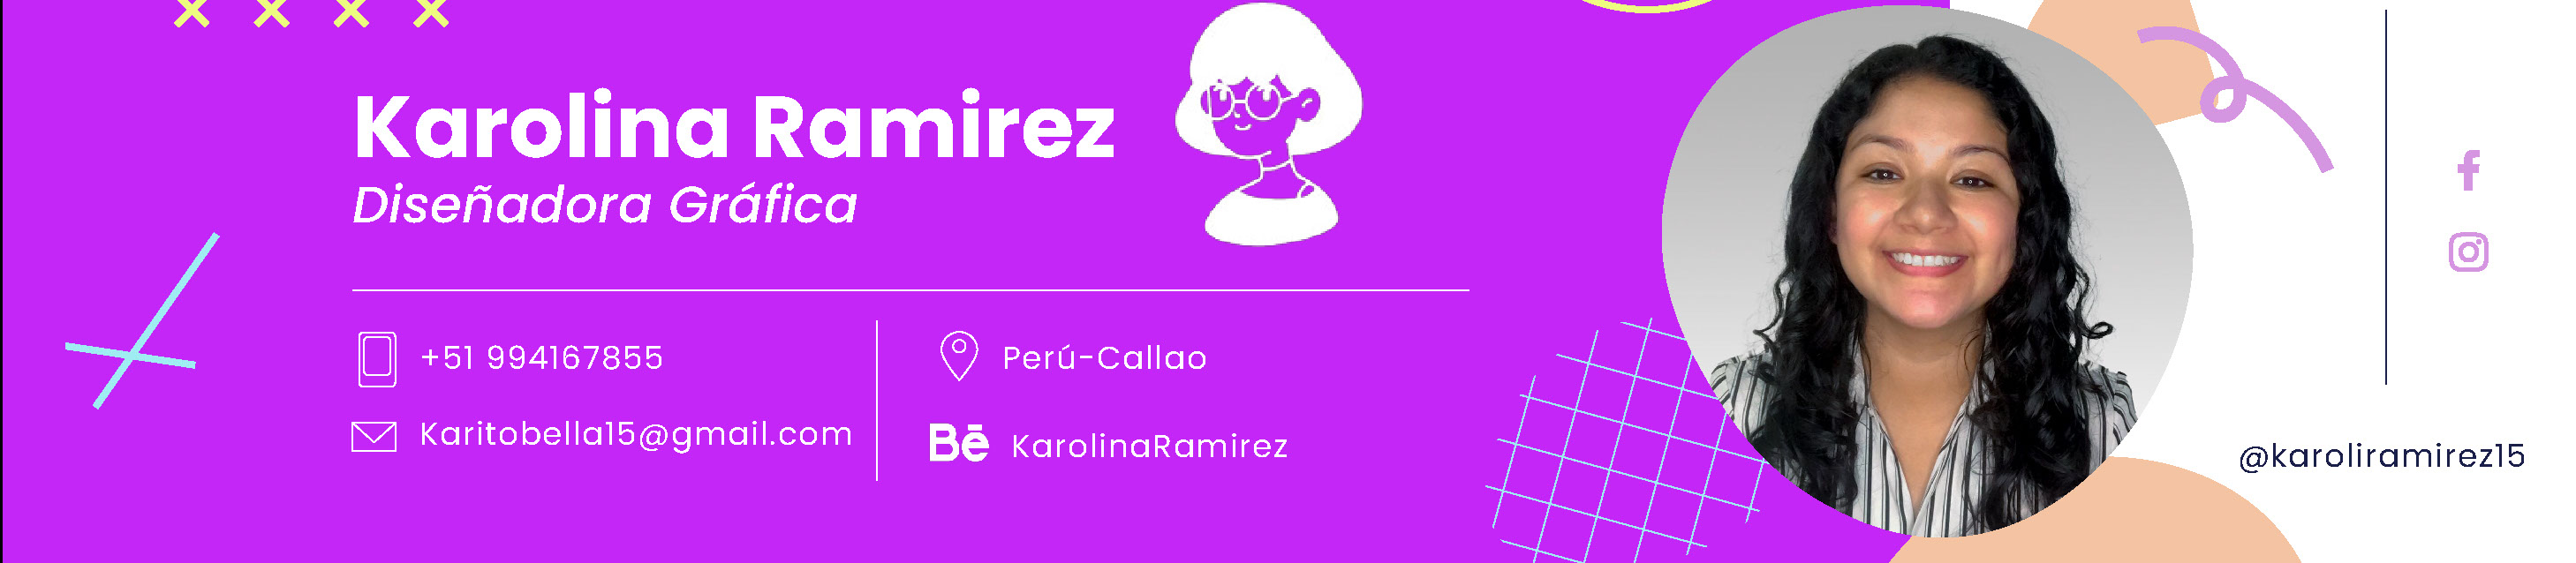 Karolina Ramirez's profile banner